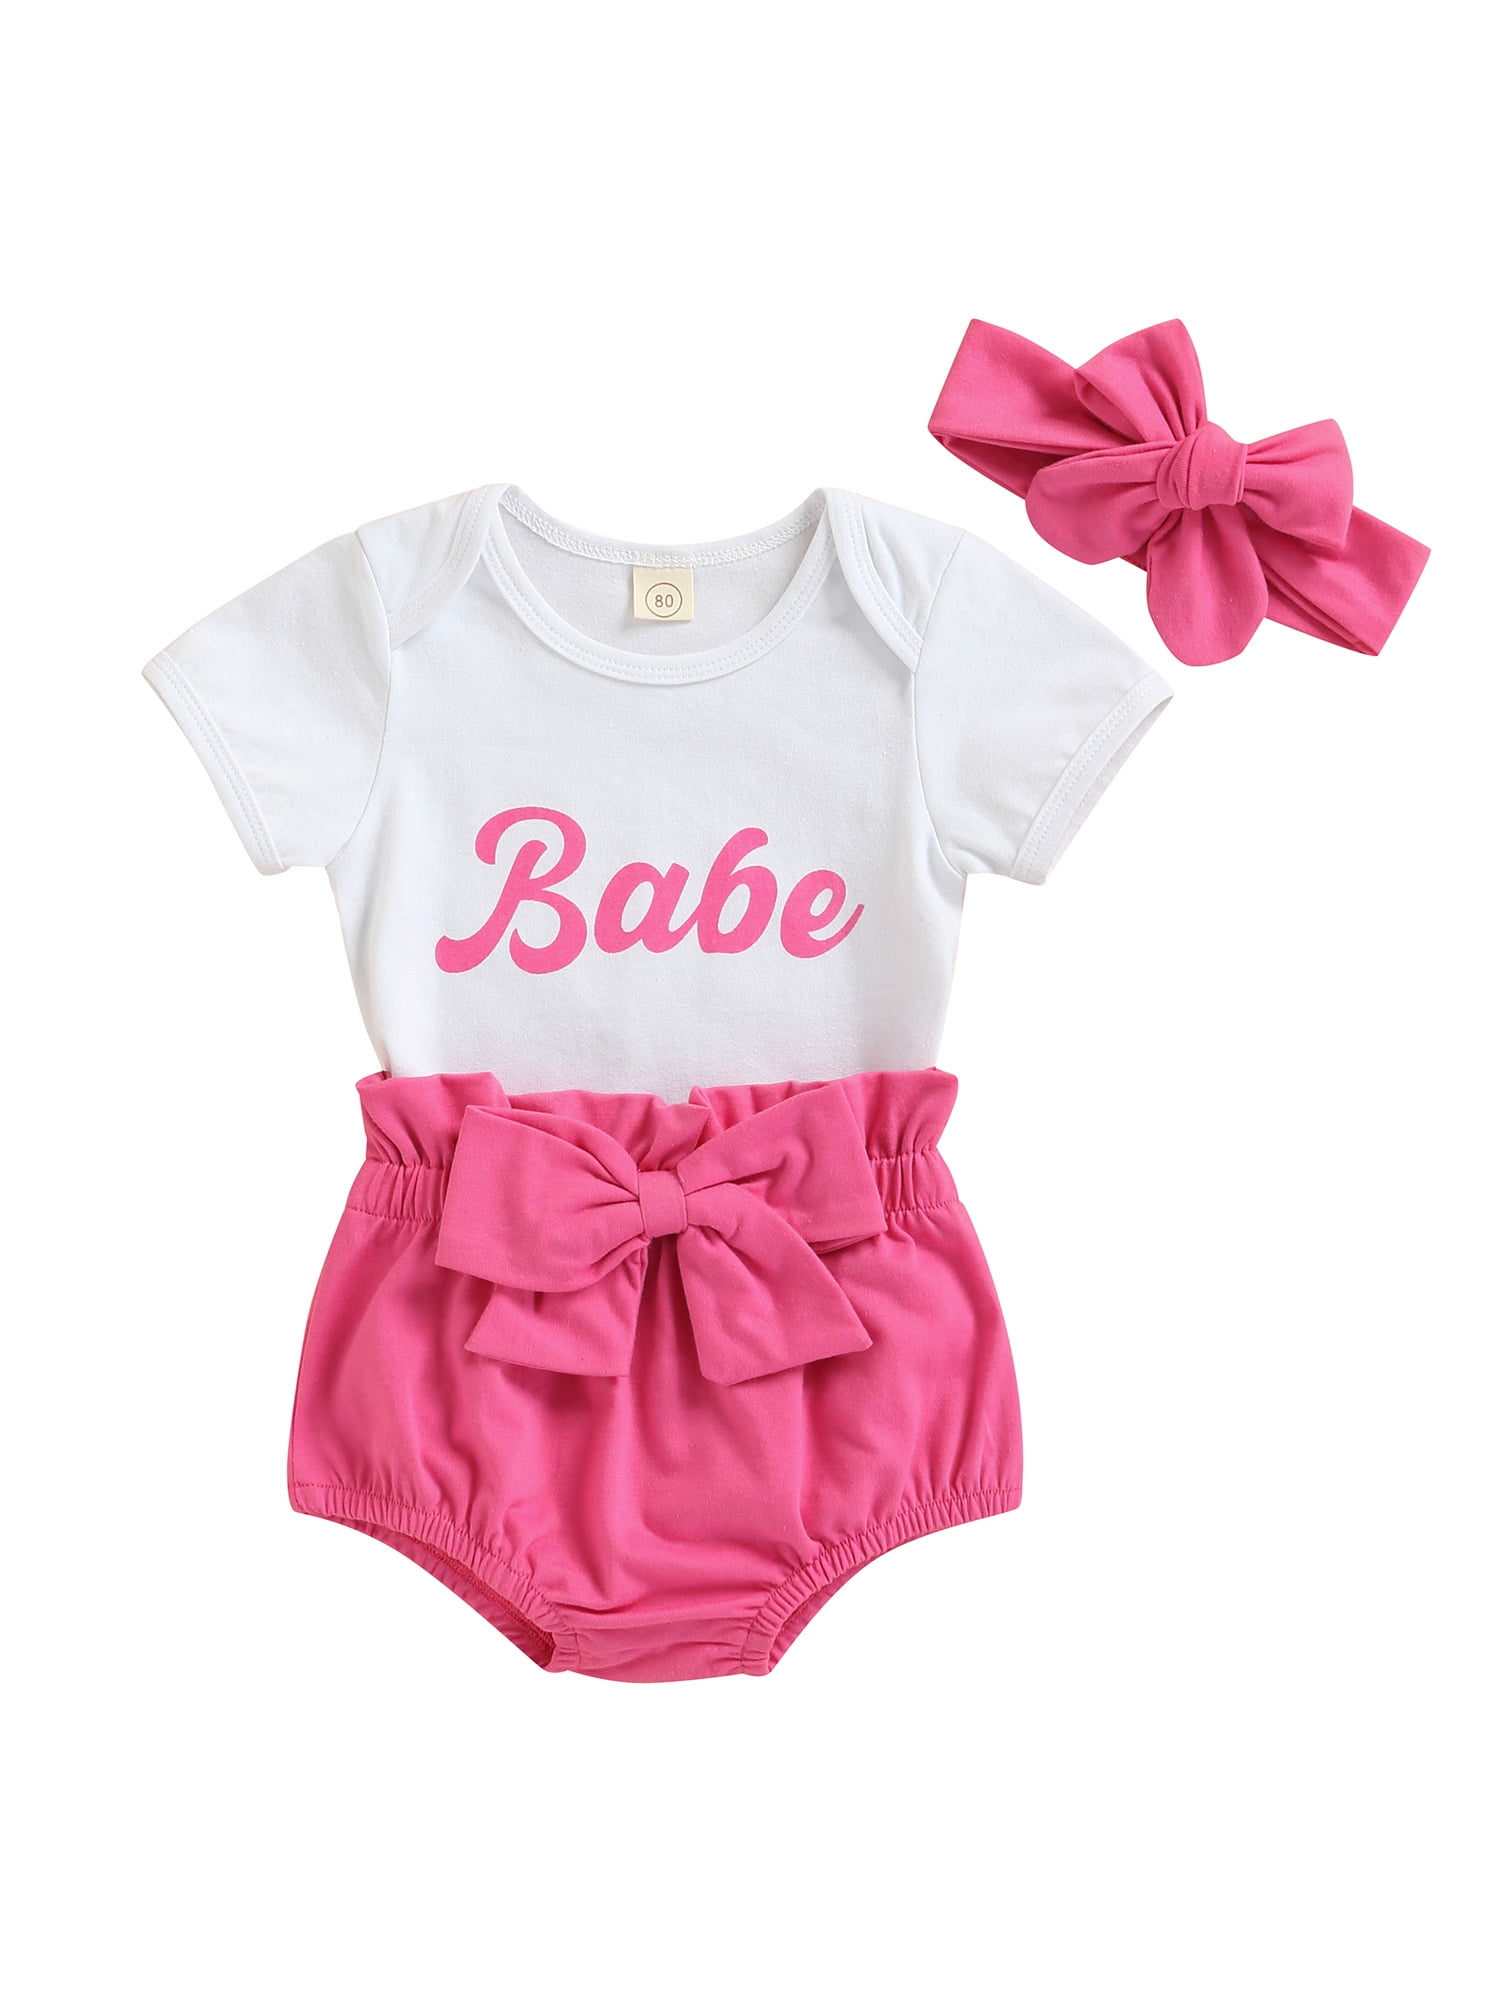 CQHY MALL Baby Girls Bowknot Harem Pants Toddler Infant Cute Summer Bloomer Shorts 